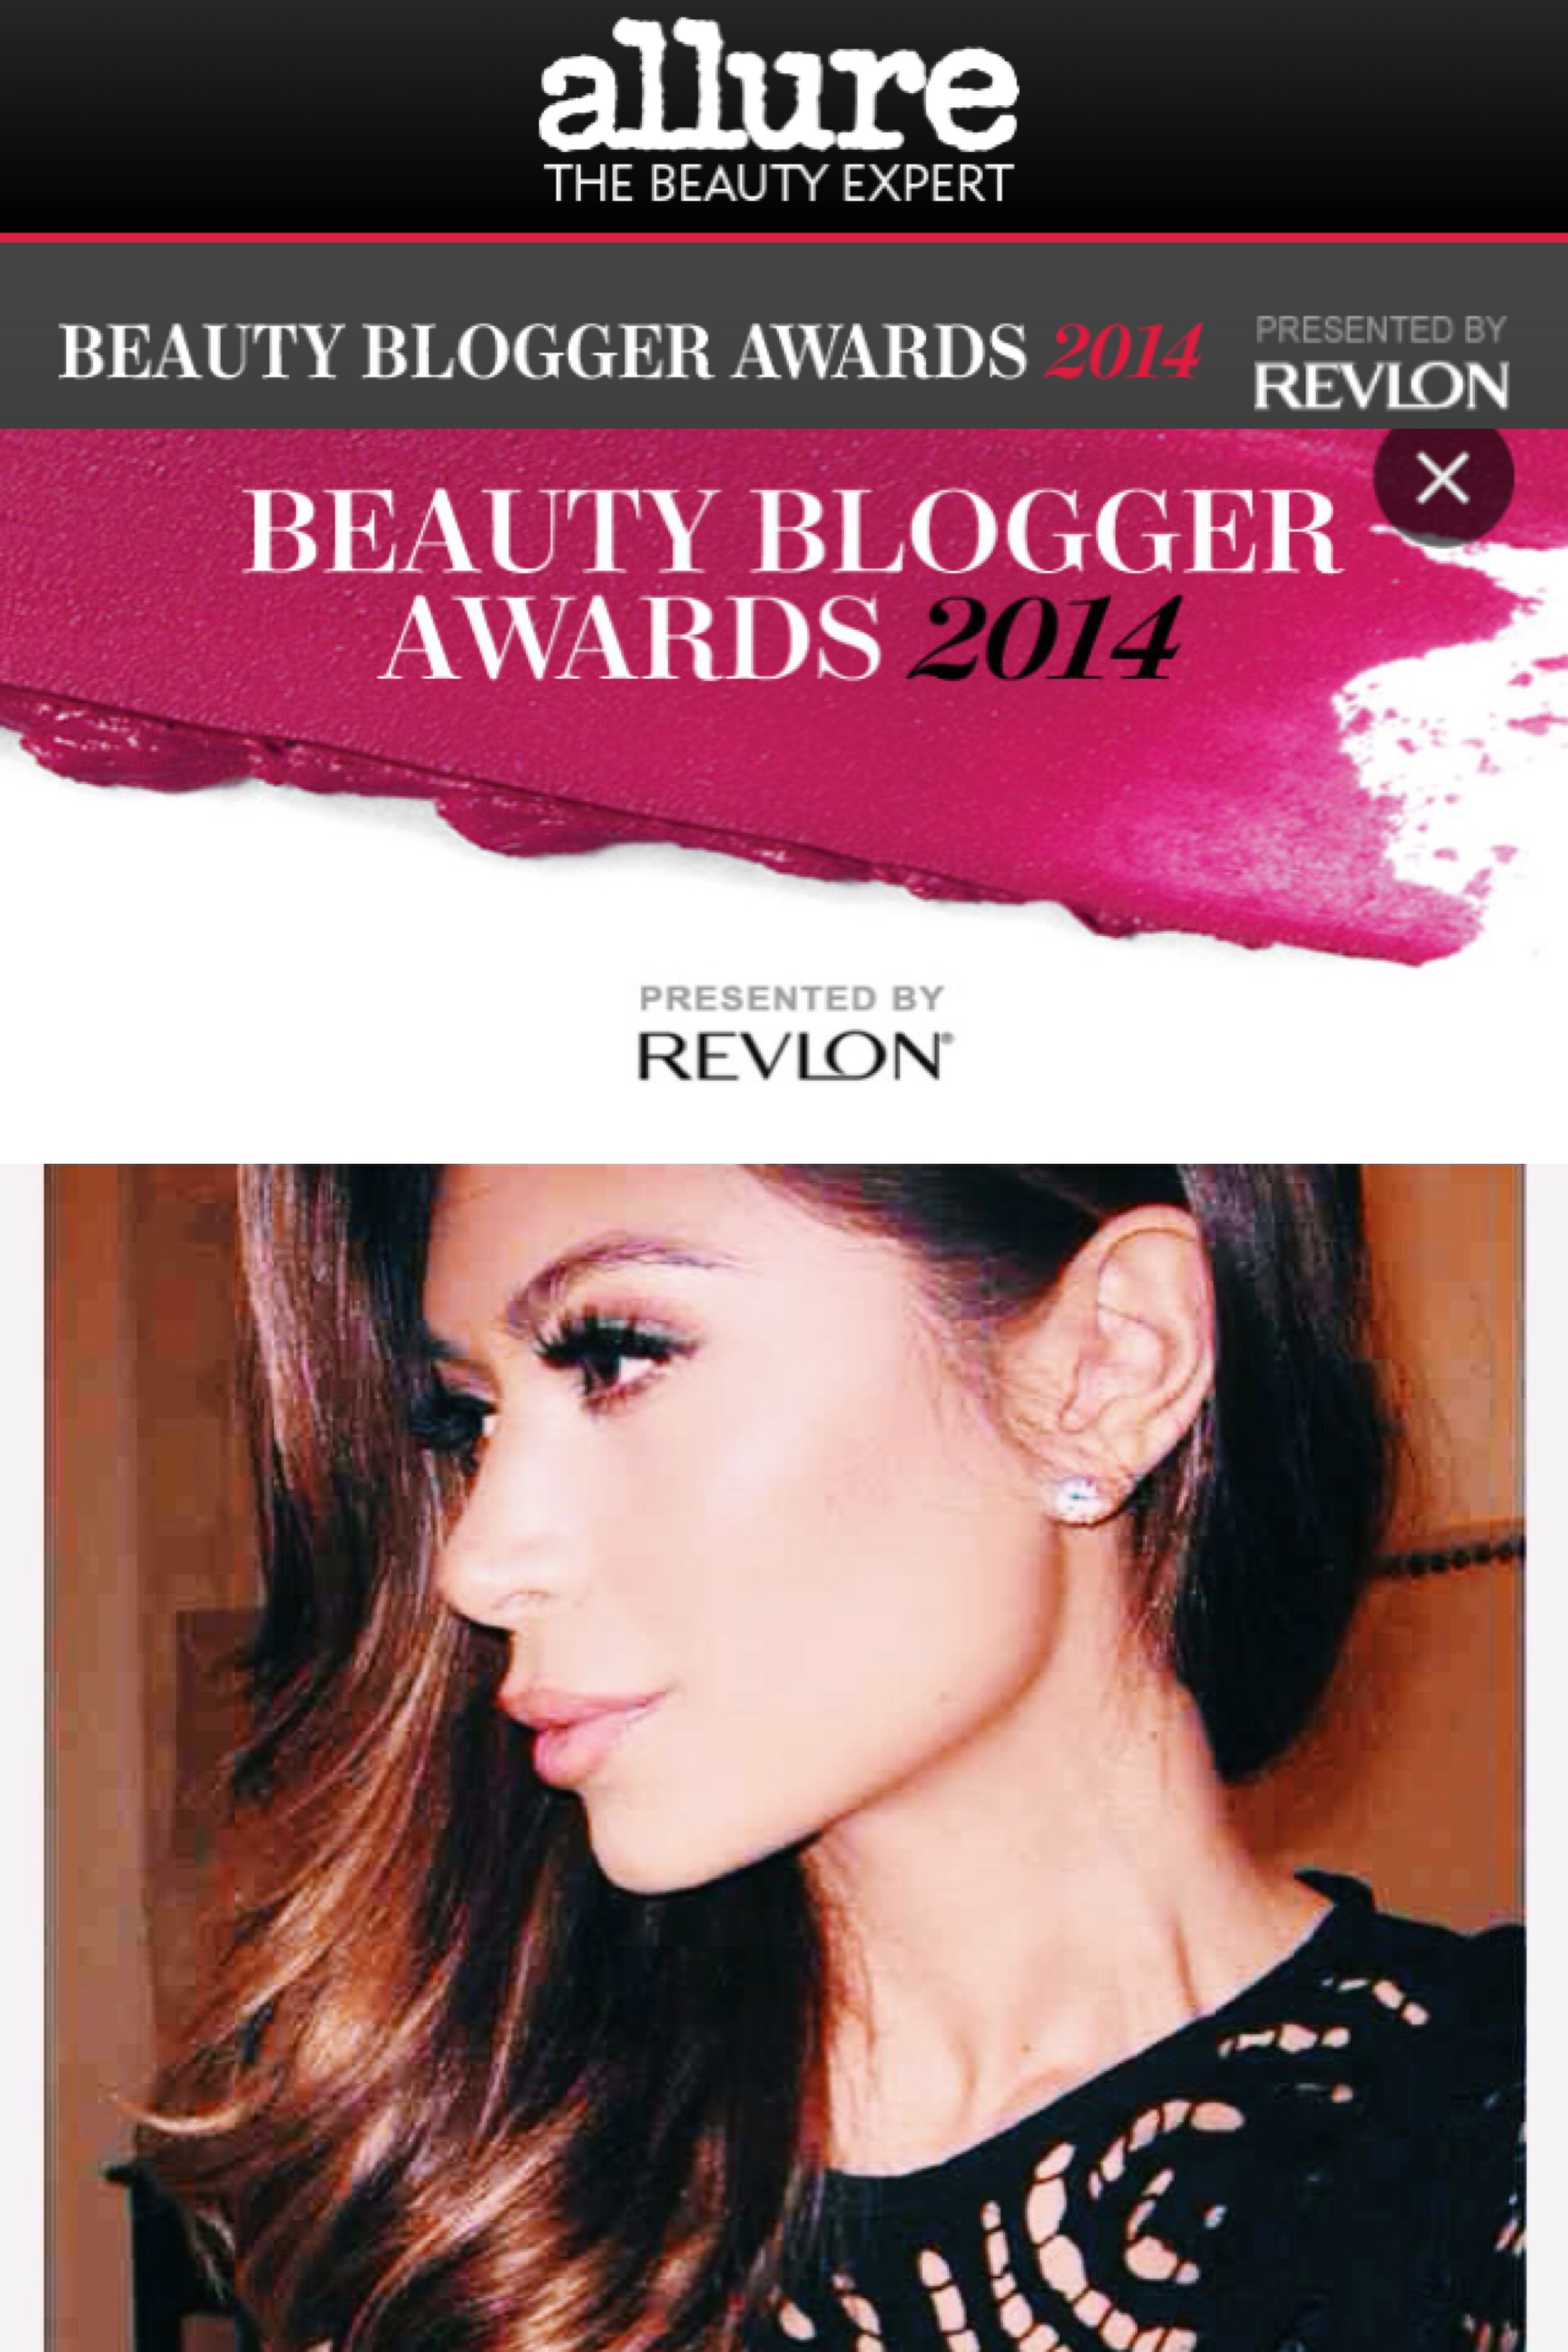 Marianna Hewitt Allure Beauty Blogger Awards Beauty Blogger of the Year 2014